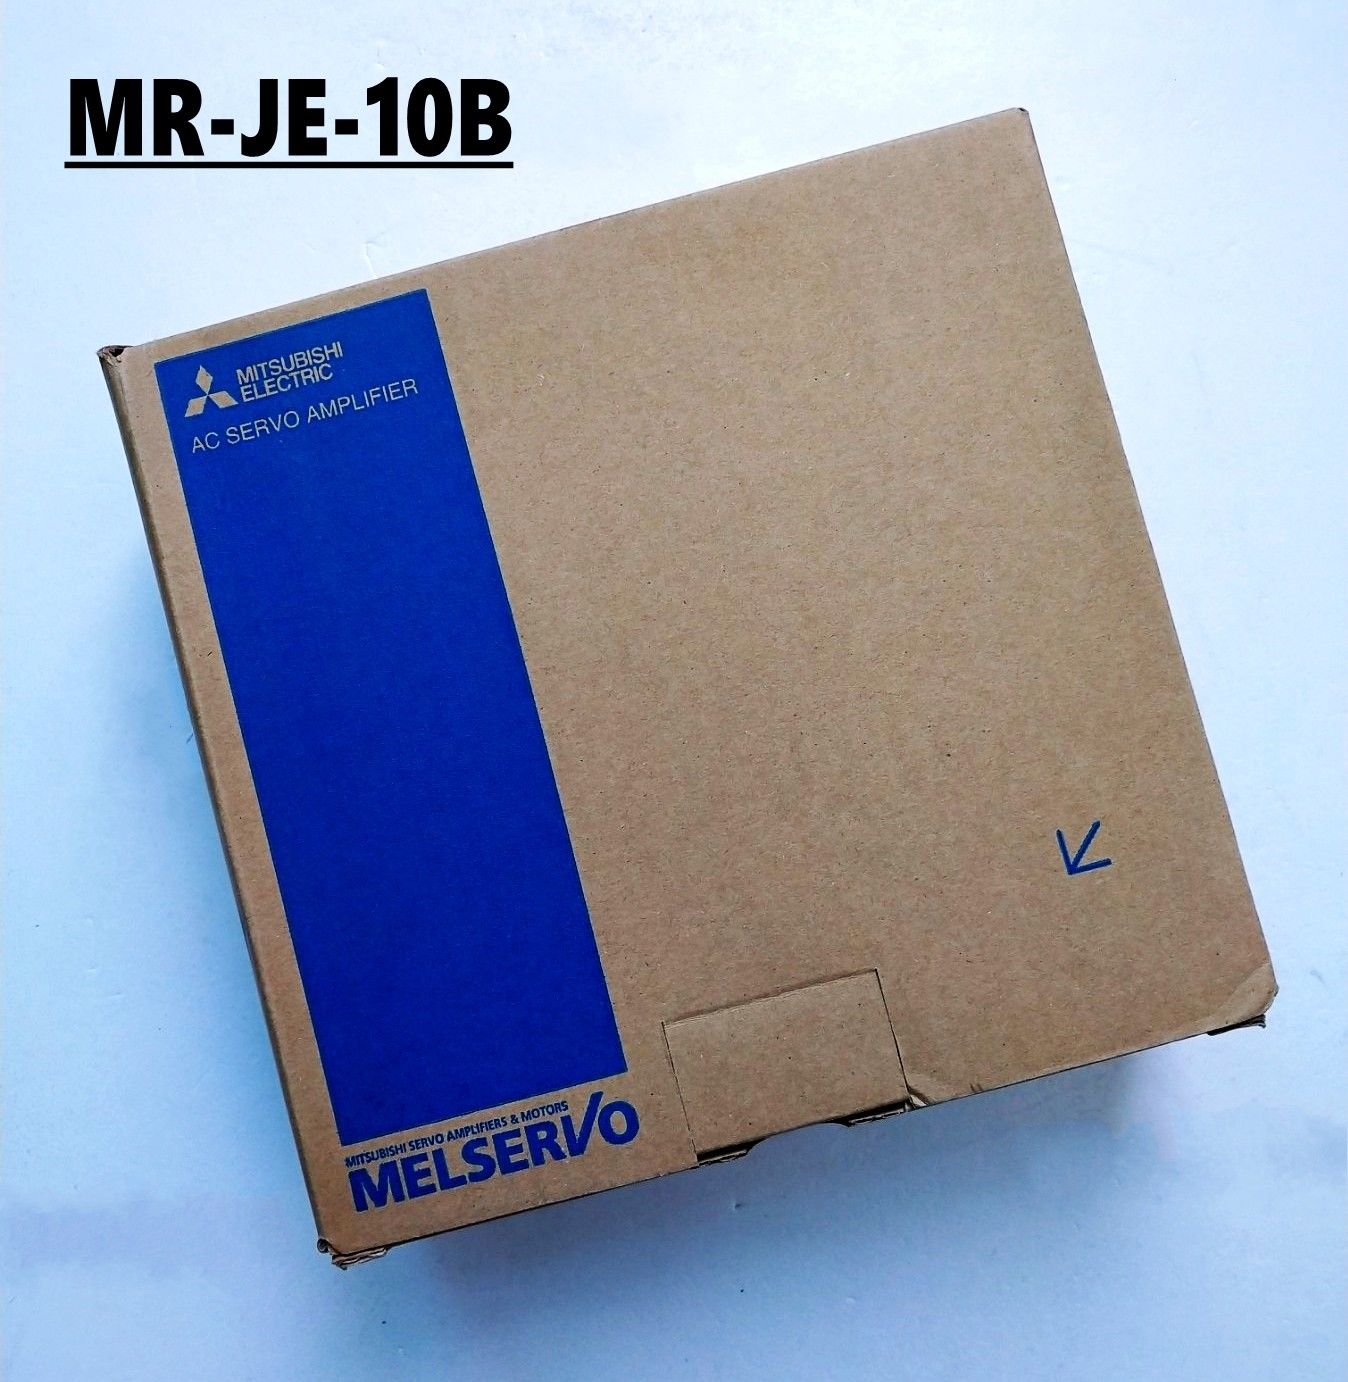 New Mitsubishi Servo Drive MR-JE-10B In Box MRJE10B - zum Schließen ins Bild klicken